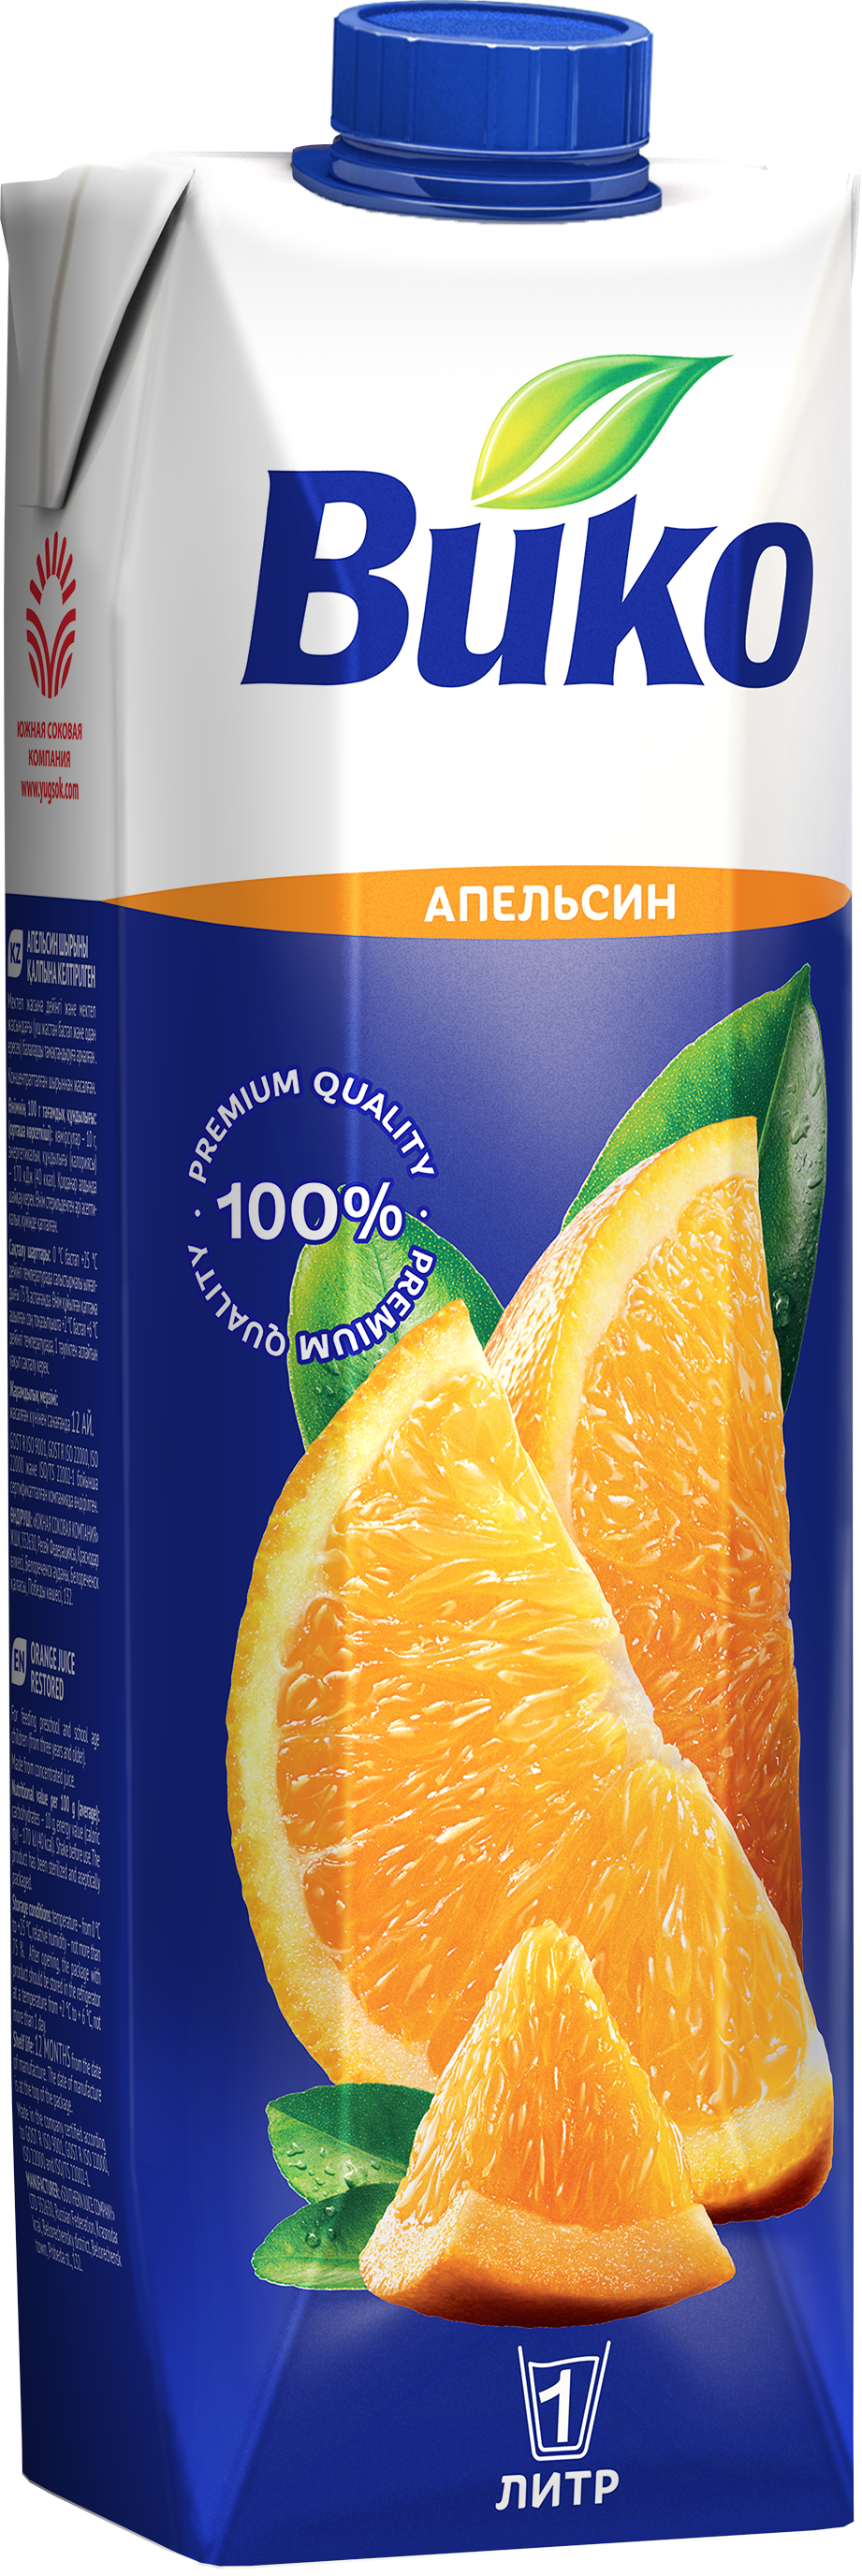 Сок ВИКО Апельсиновый без сахара 1 л х 6 шт. - фото 4